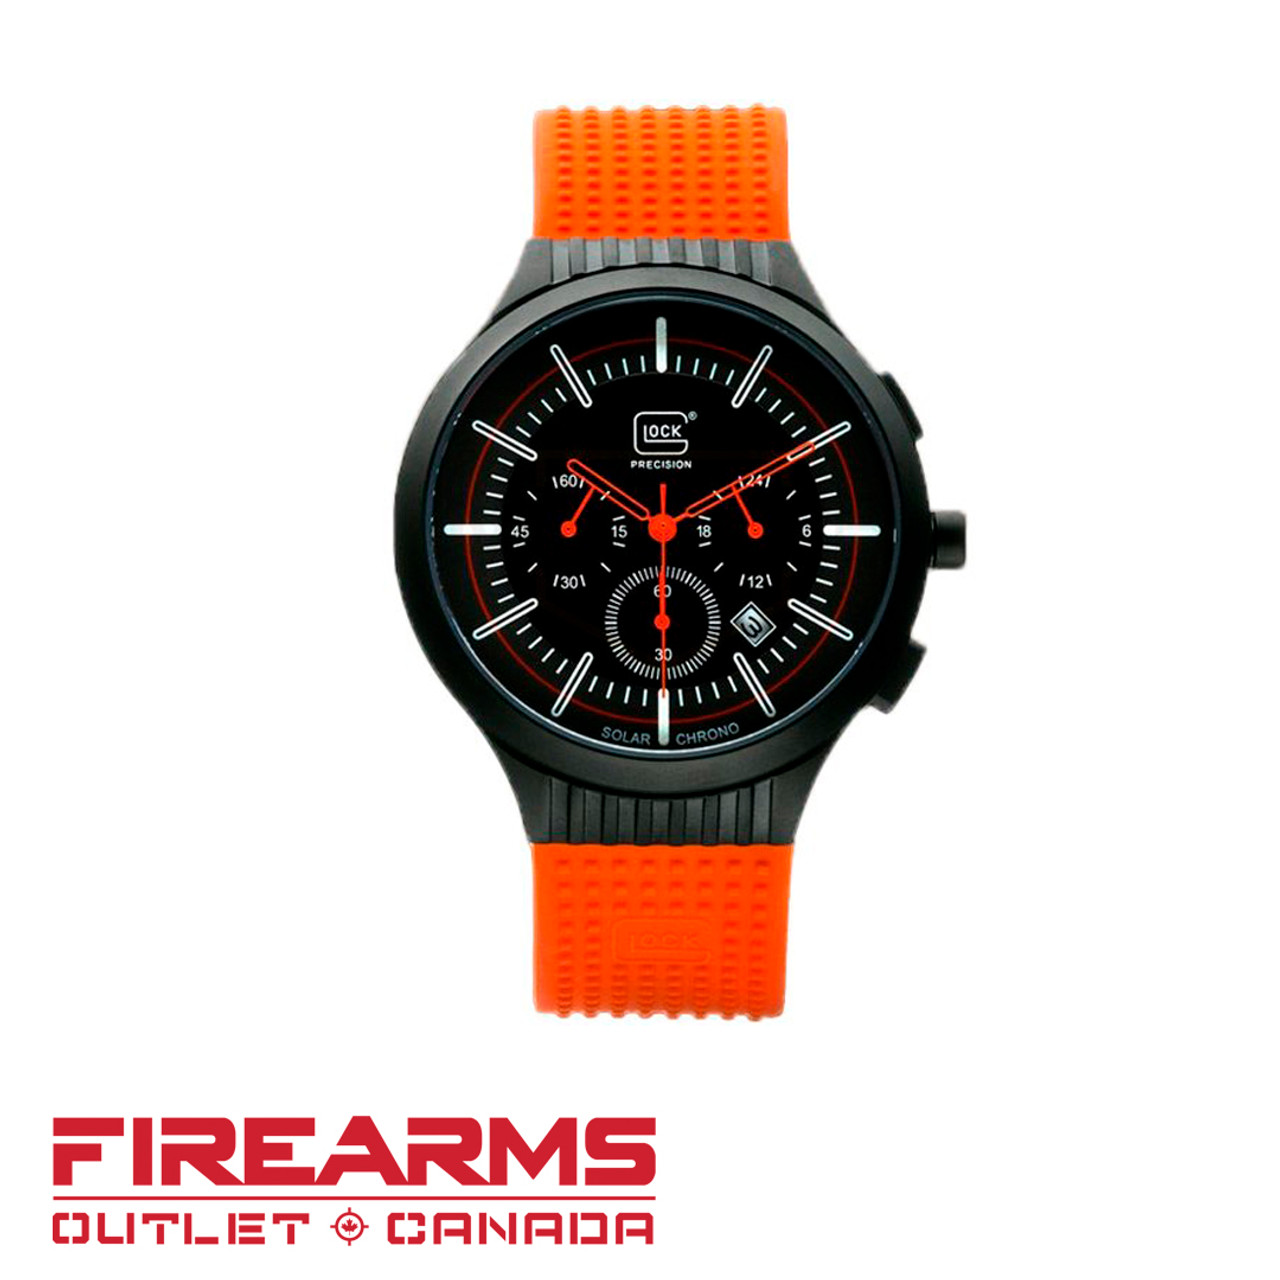 Glock Precision Chronograph Watch Global [WC0003]